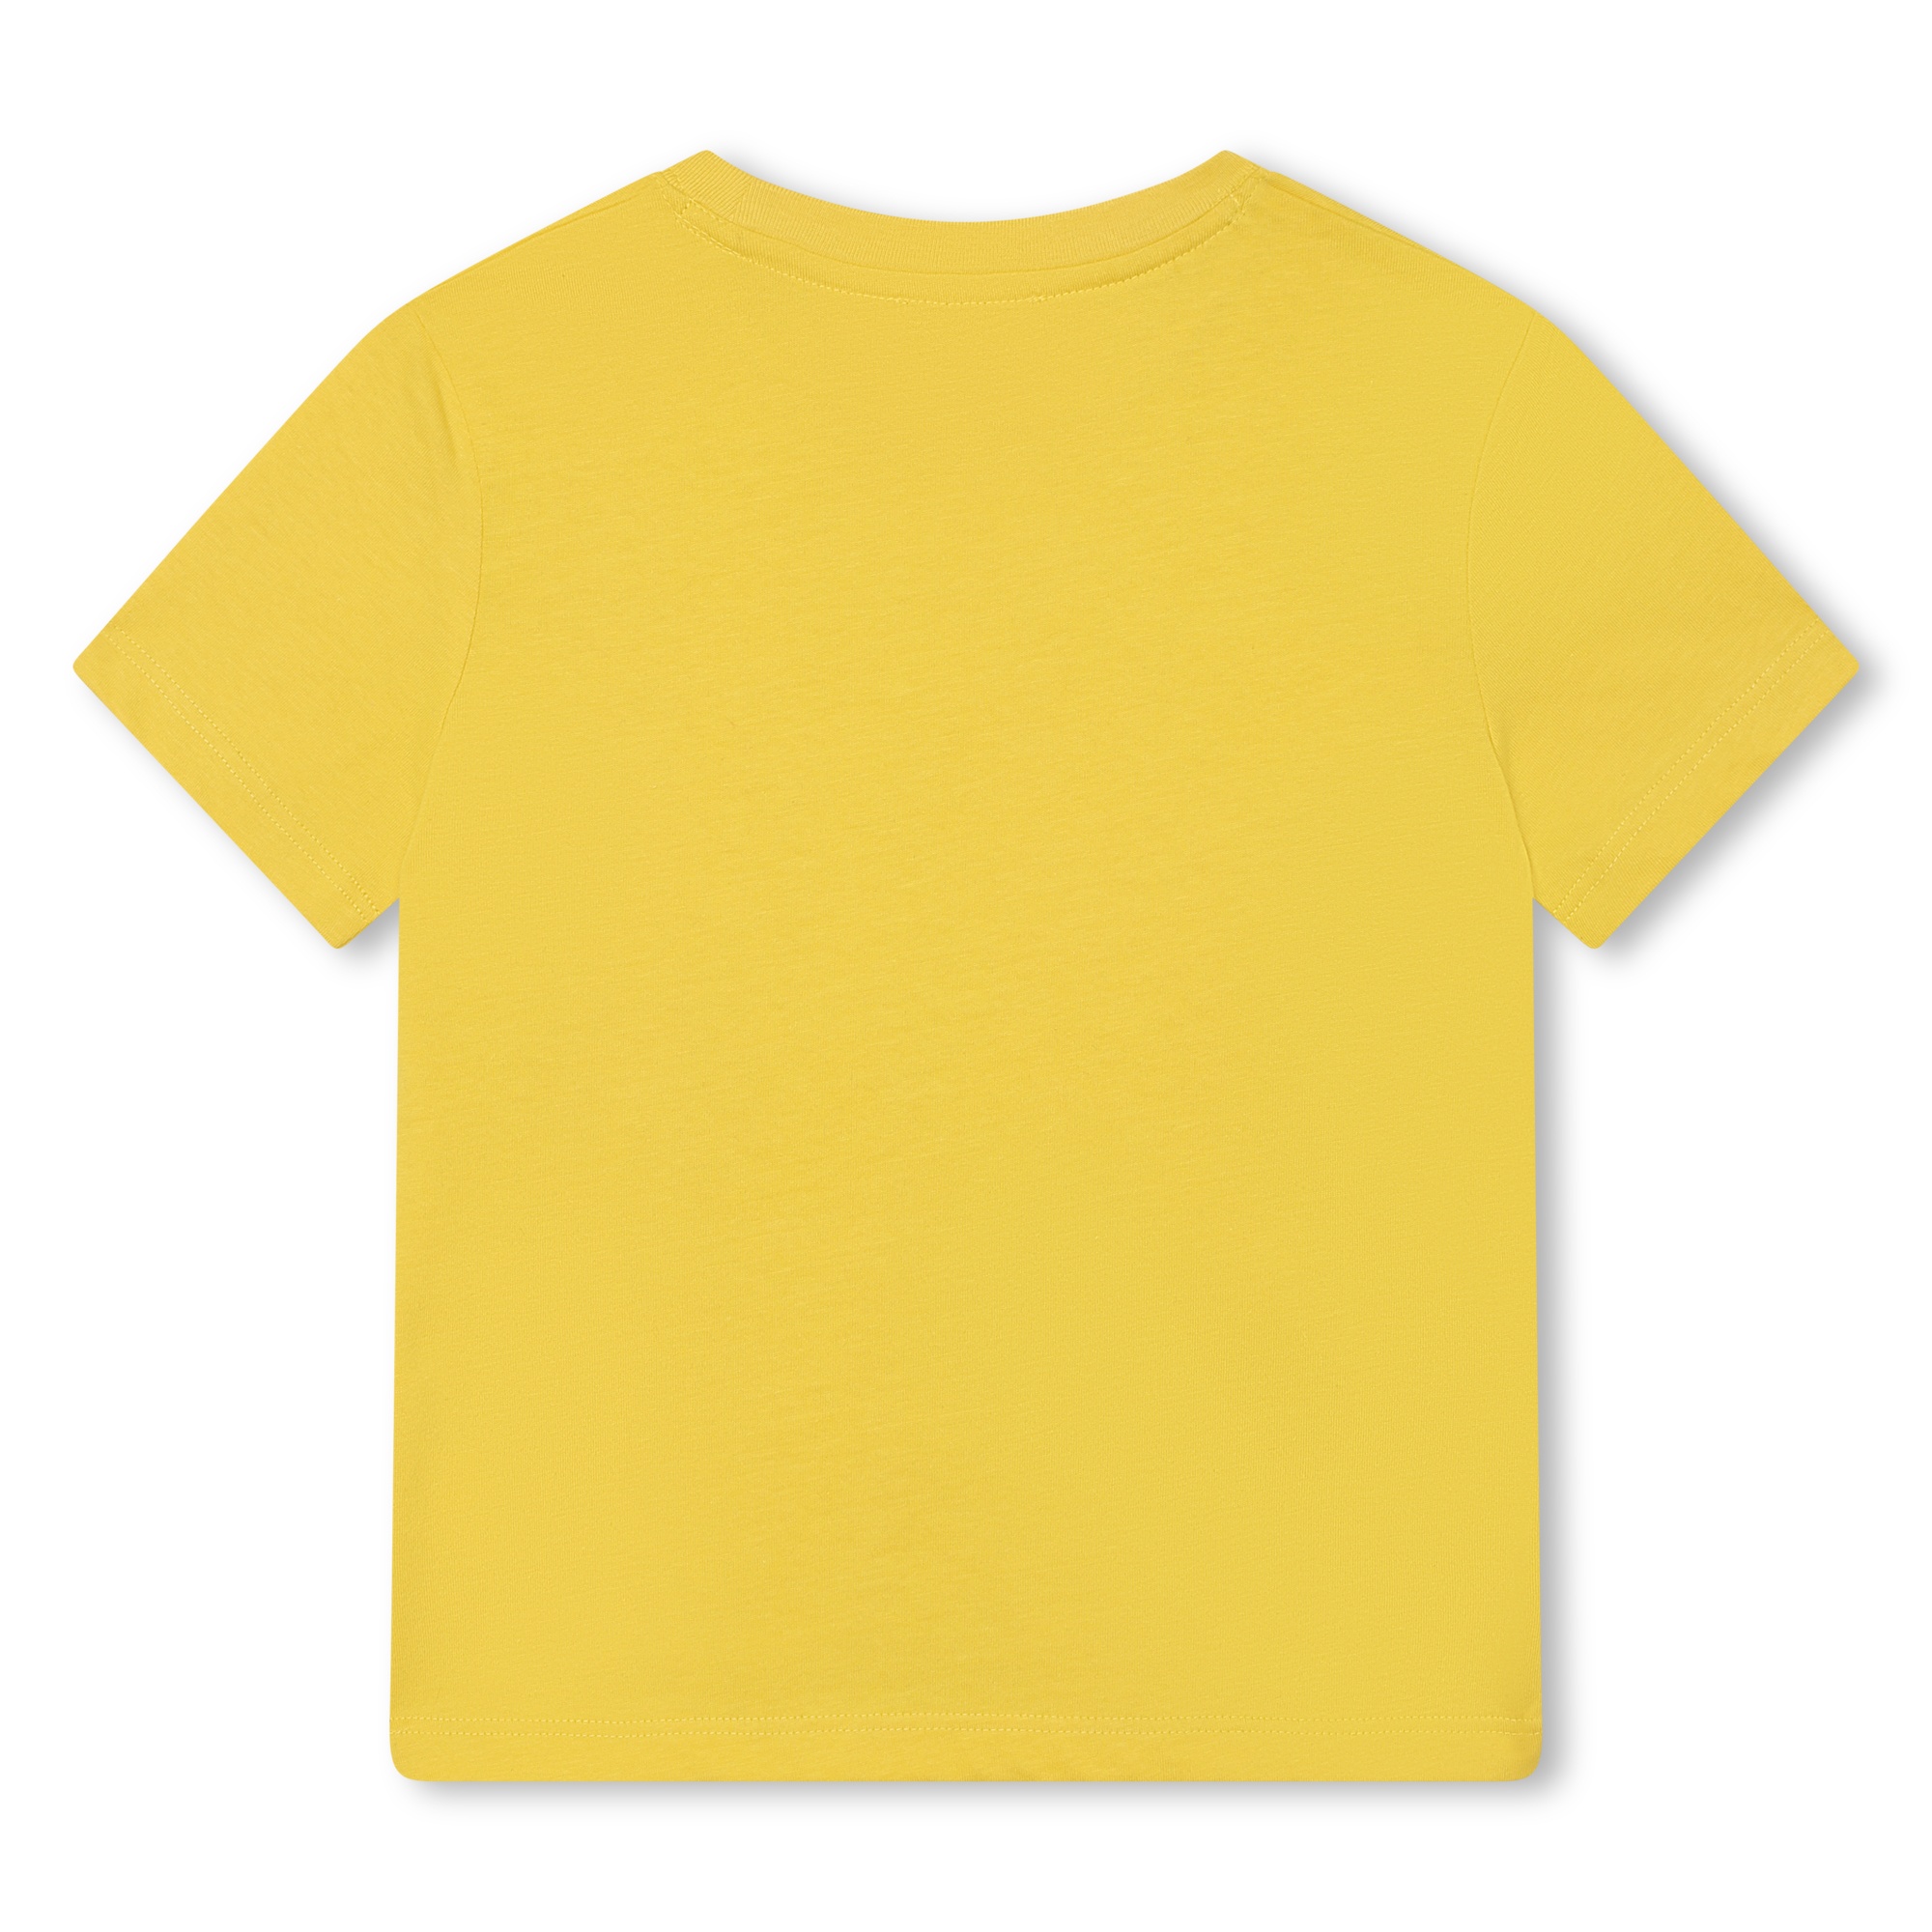 Camiseta de piel de melocotón MARC JACOBS para UNISEXO